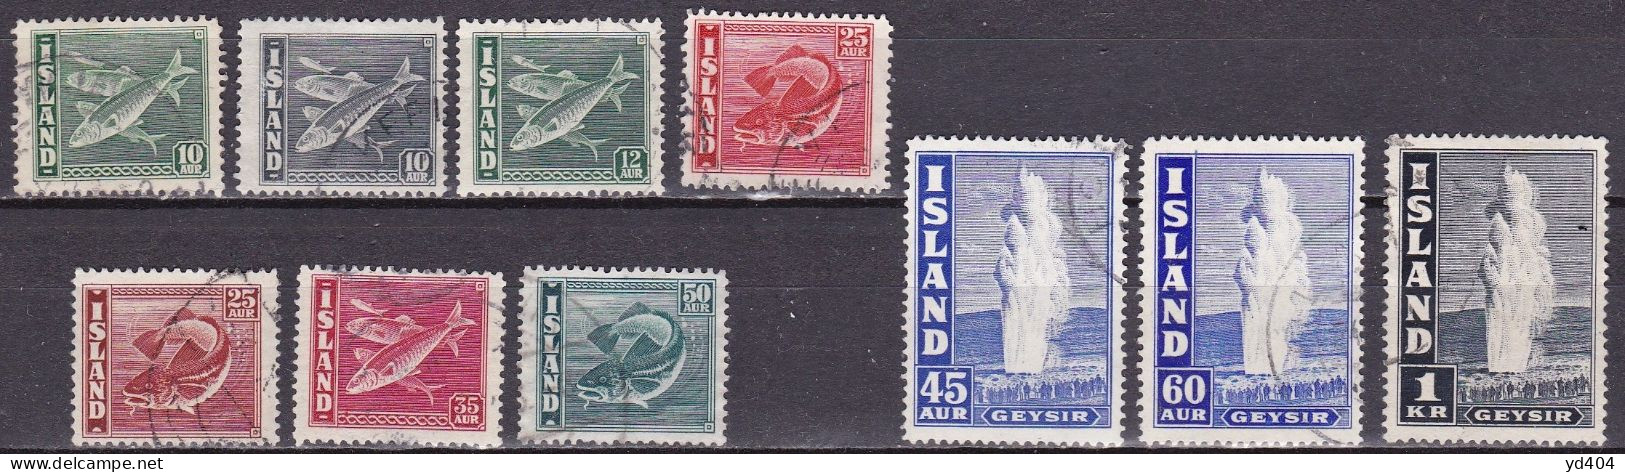 IS042 – ISLANDE – ICELAND – 1940-45 – FISHES & GEYSER – Y&T # 189/198a USED - Oblitérés